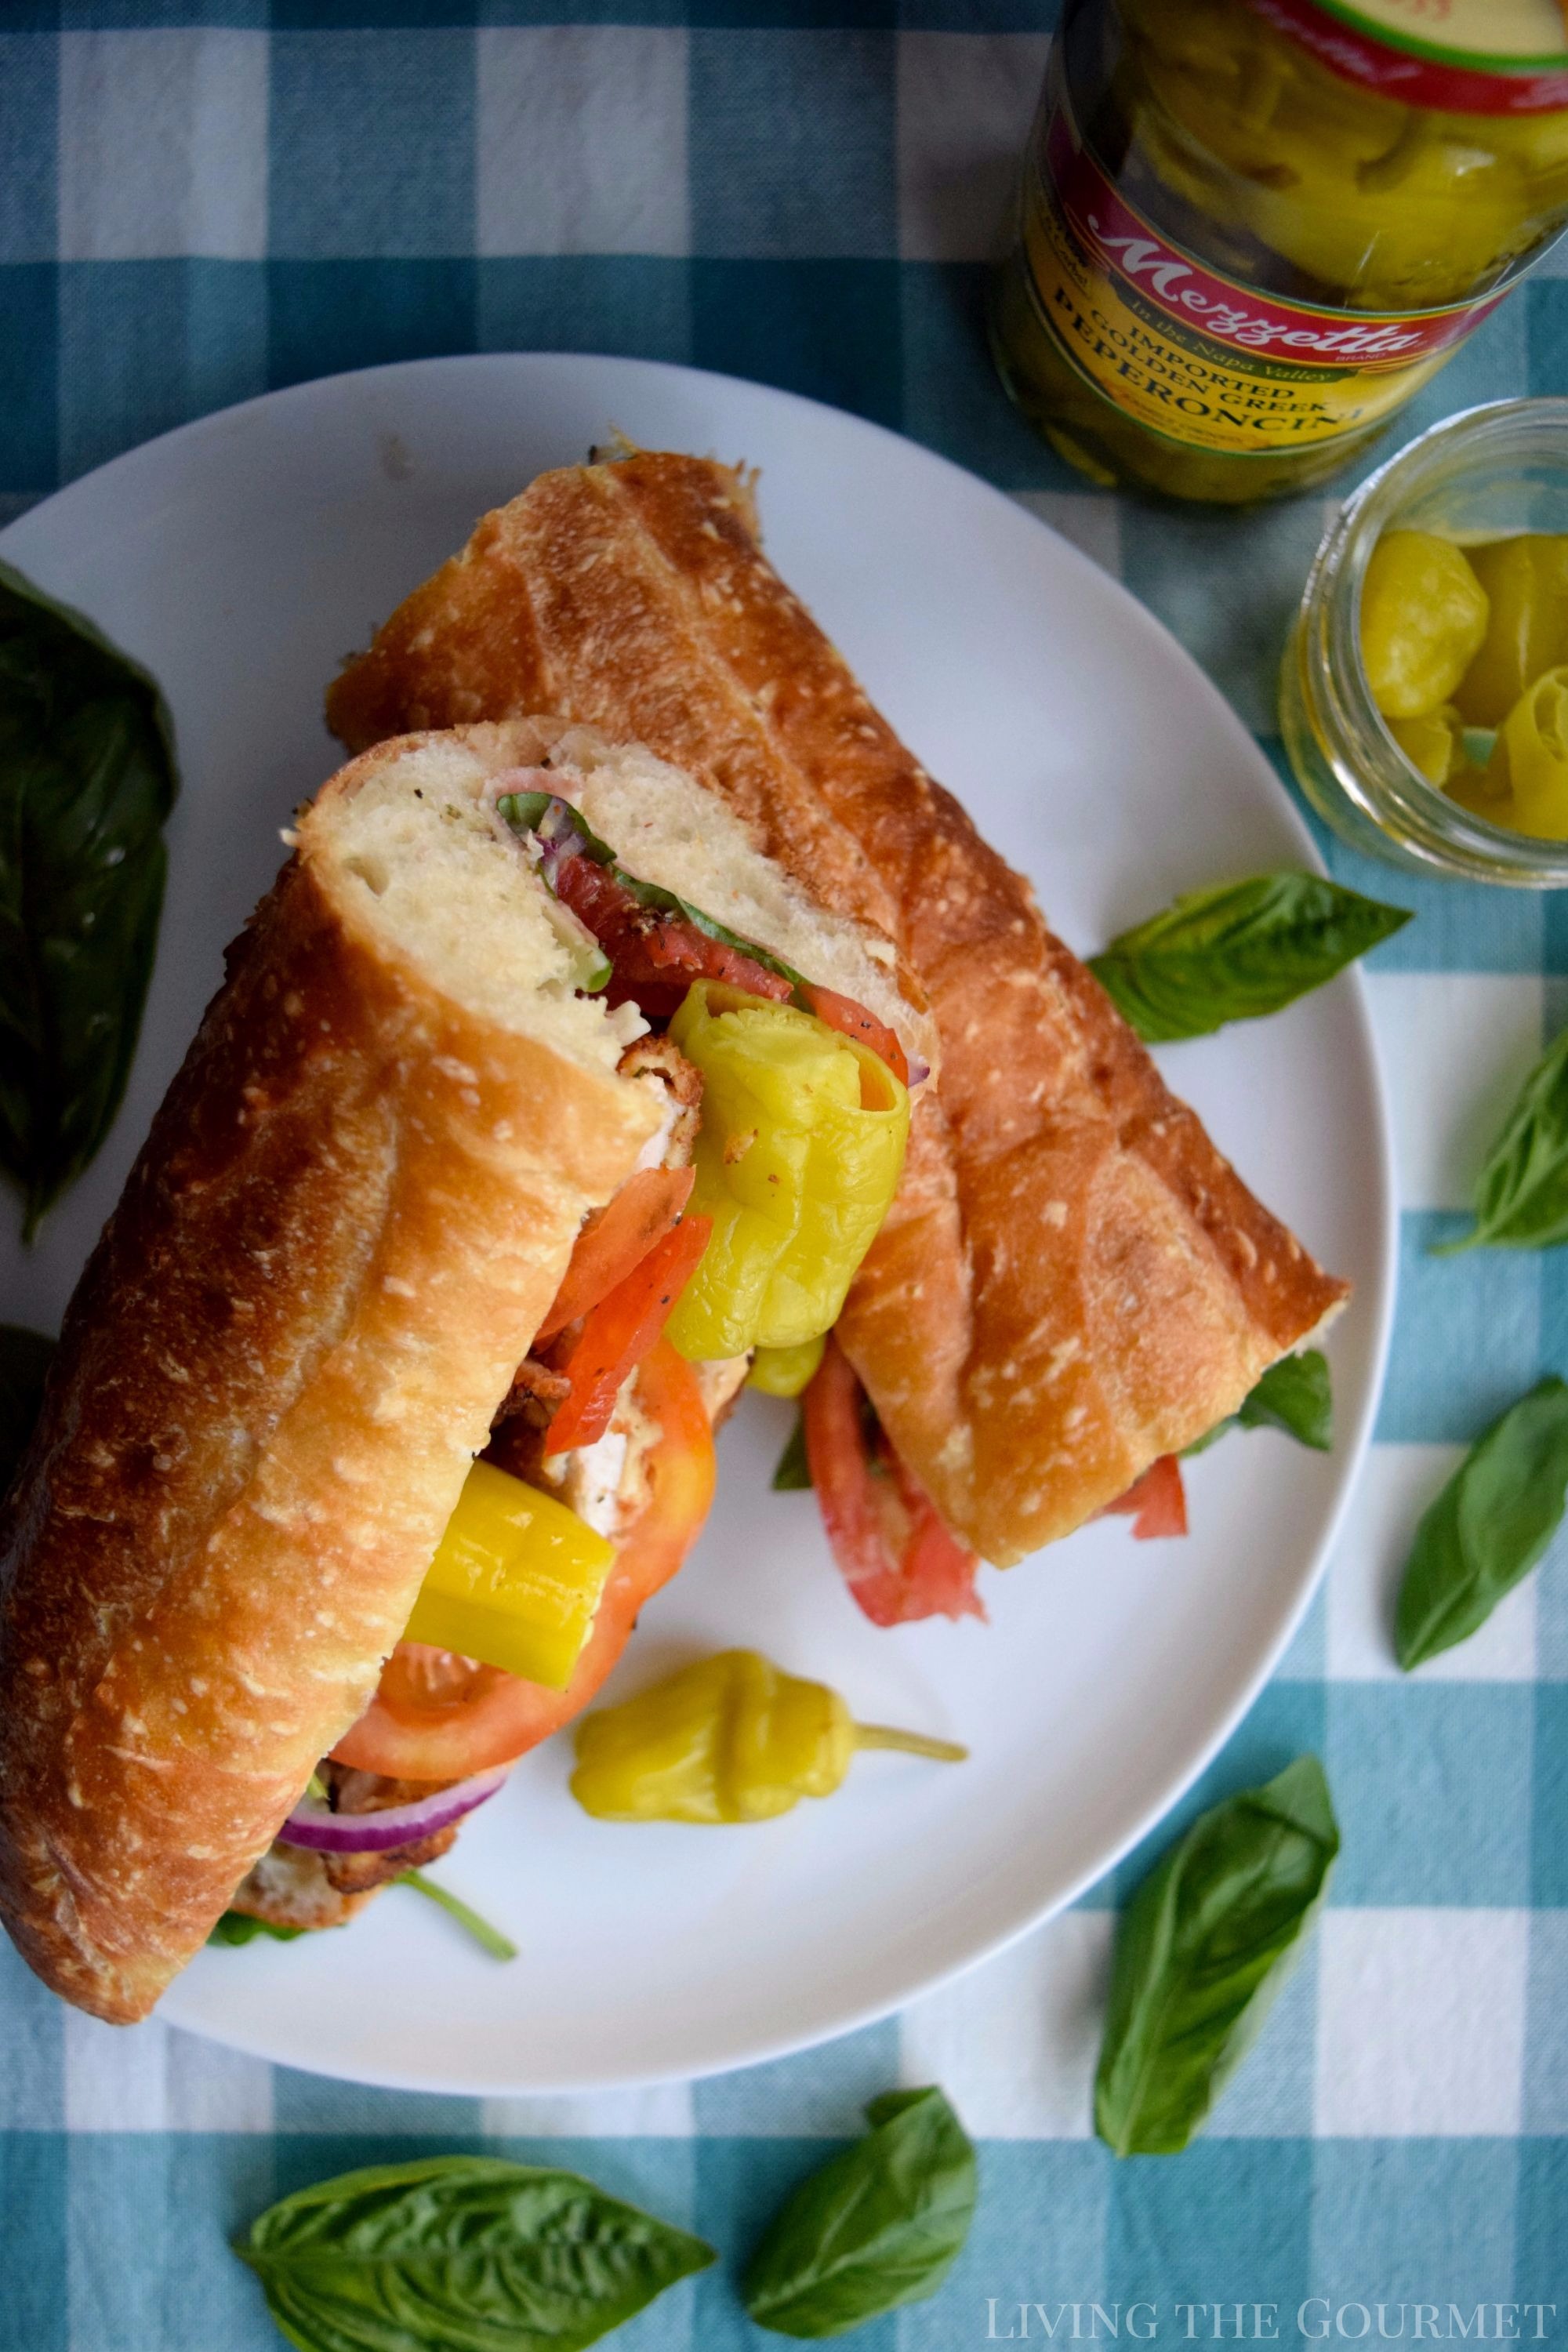 Living the Gourmet: Italian Peperoncini Sub Sandwiches are a delicious way to enjoy the mildly piquant, fruity flavor of Mezzetta Peperoncini | #DontForgettaMezzetta #Mezzetta